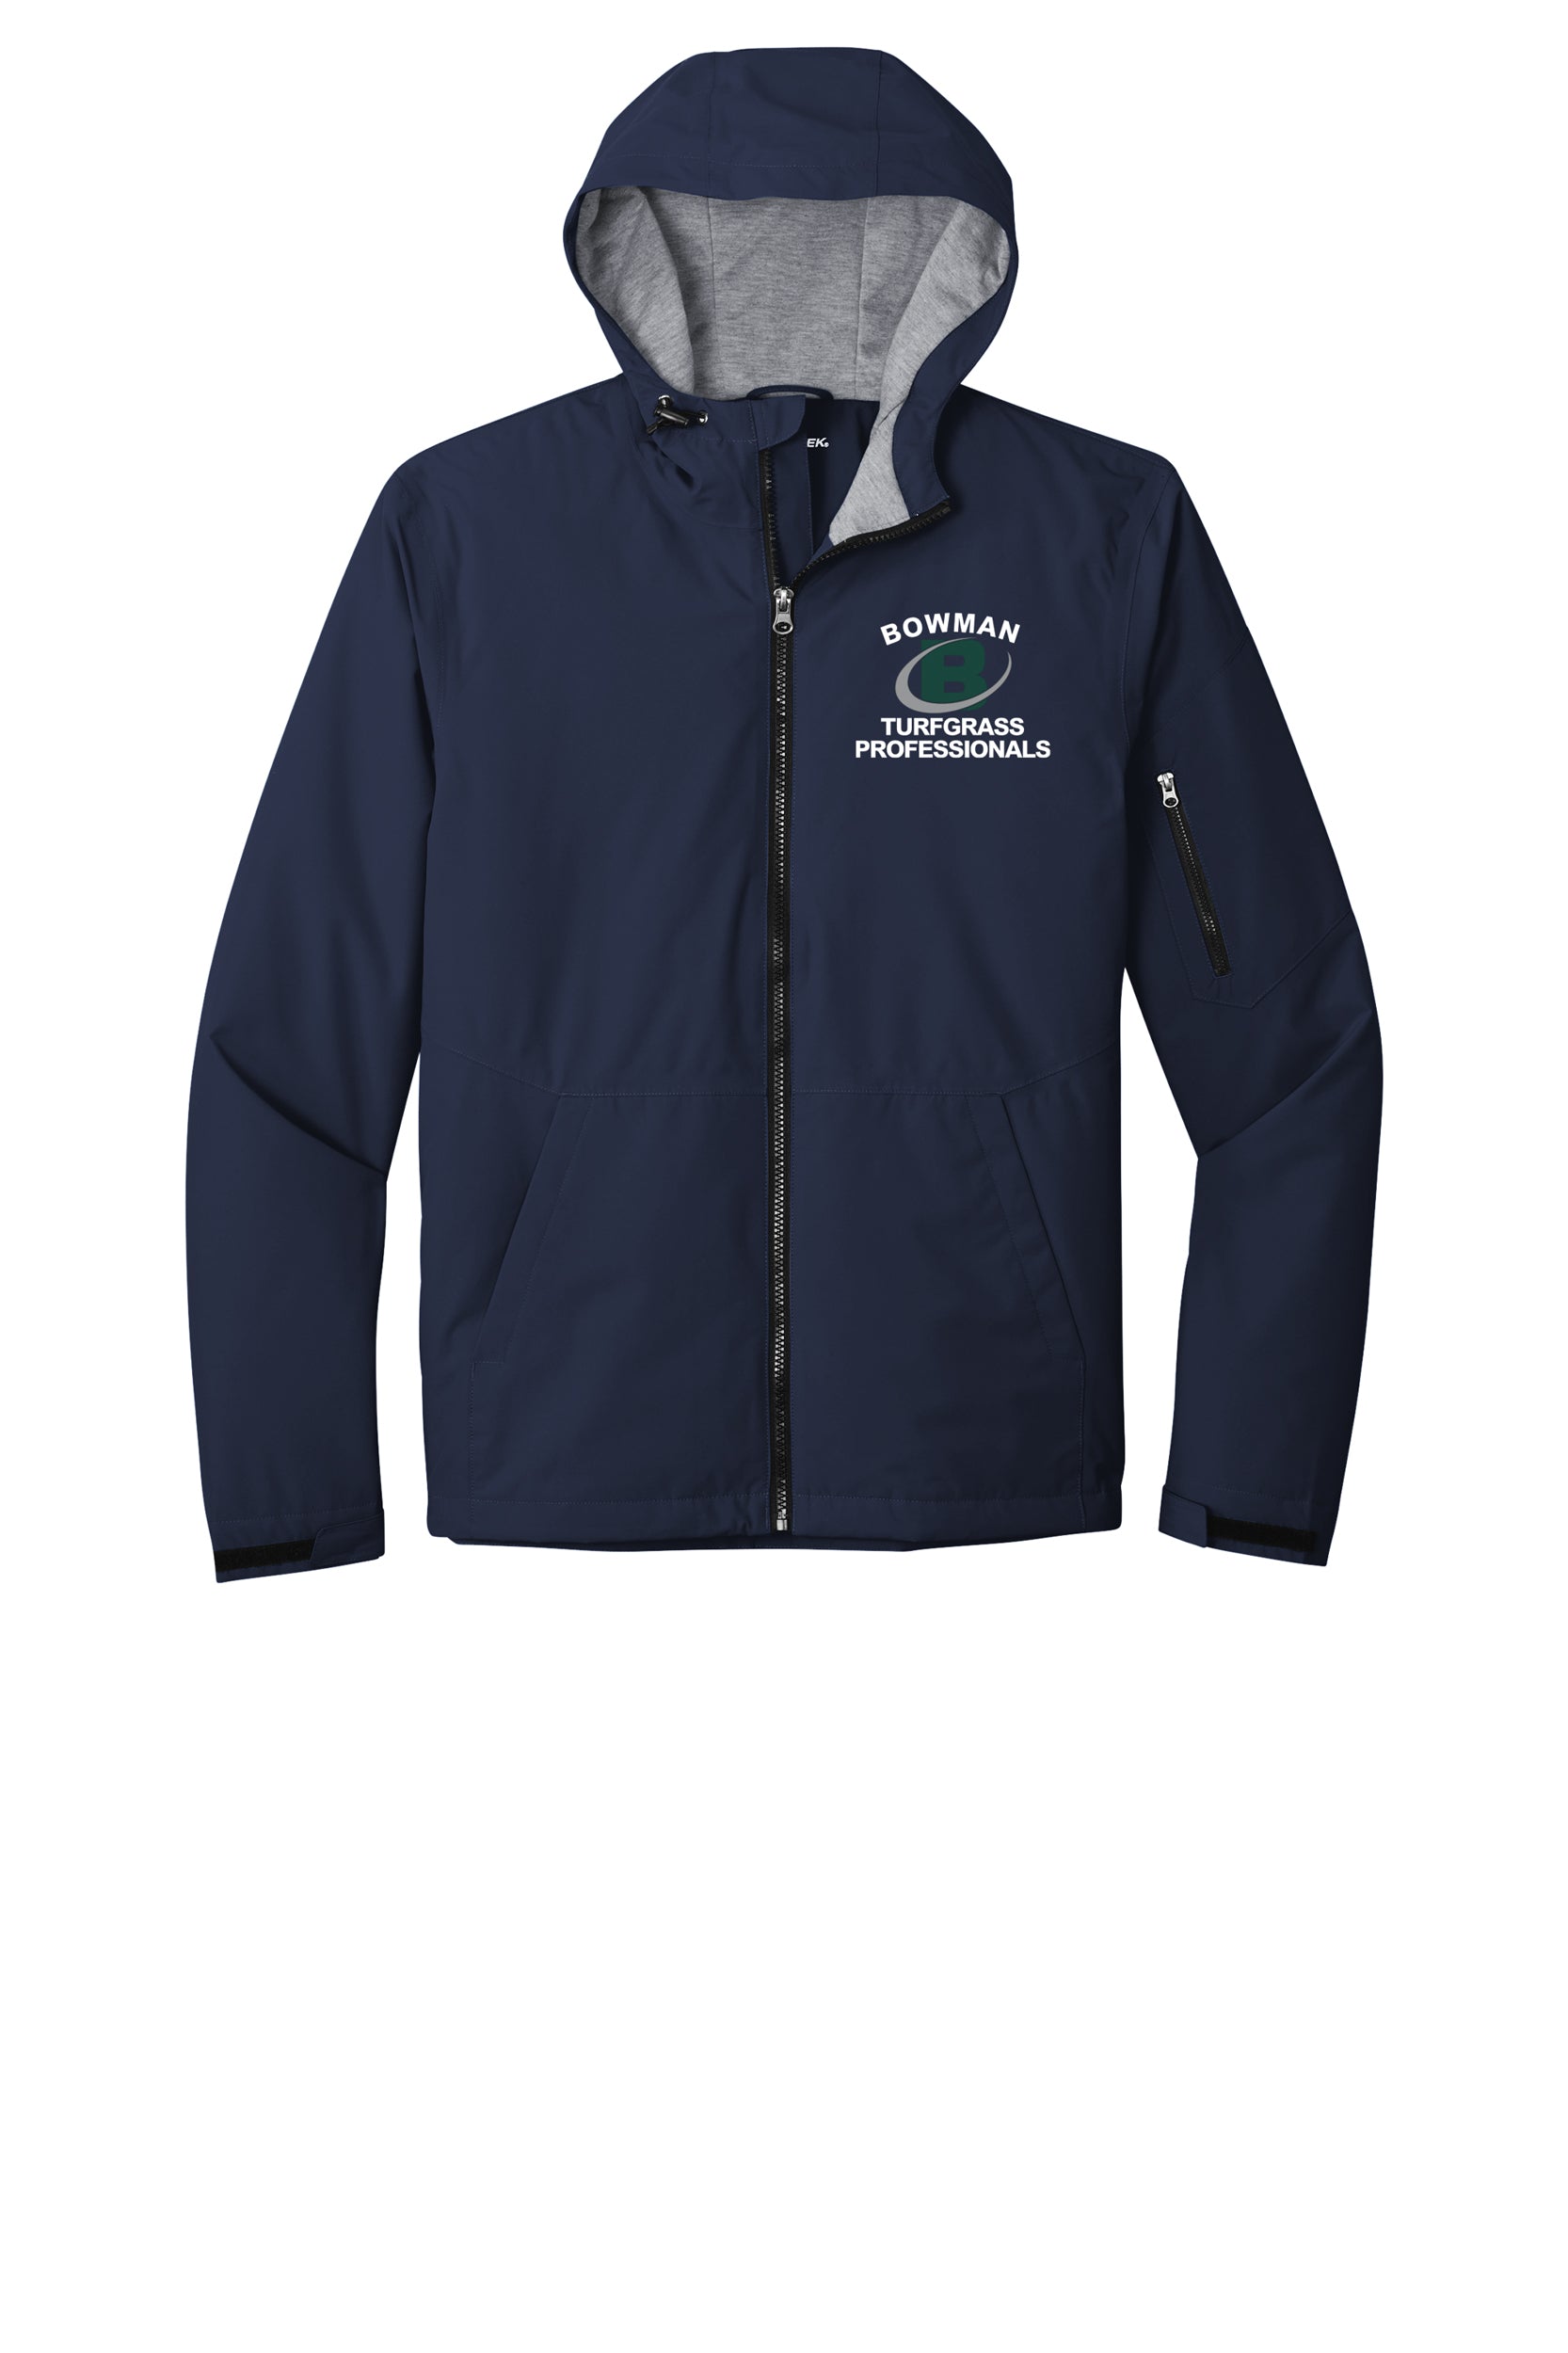 Bowman Turfgrass Professionals - Waterproof Insulated Jacket